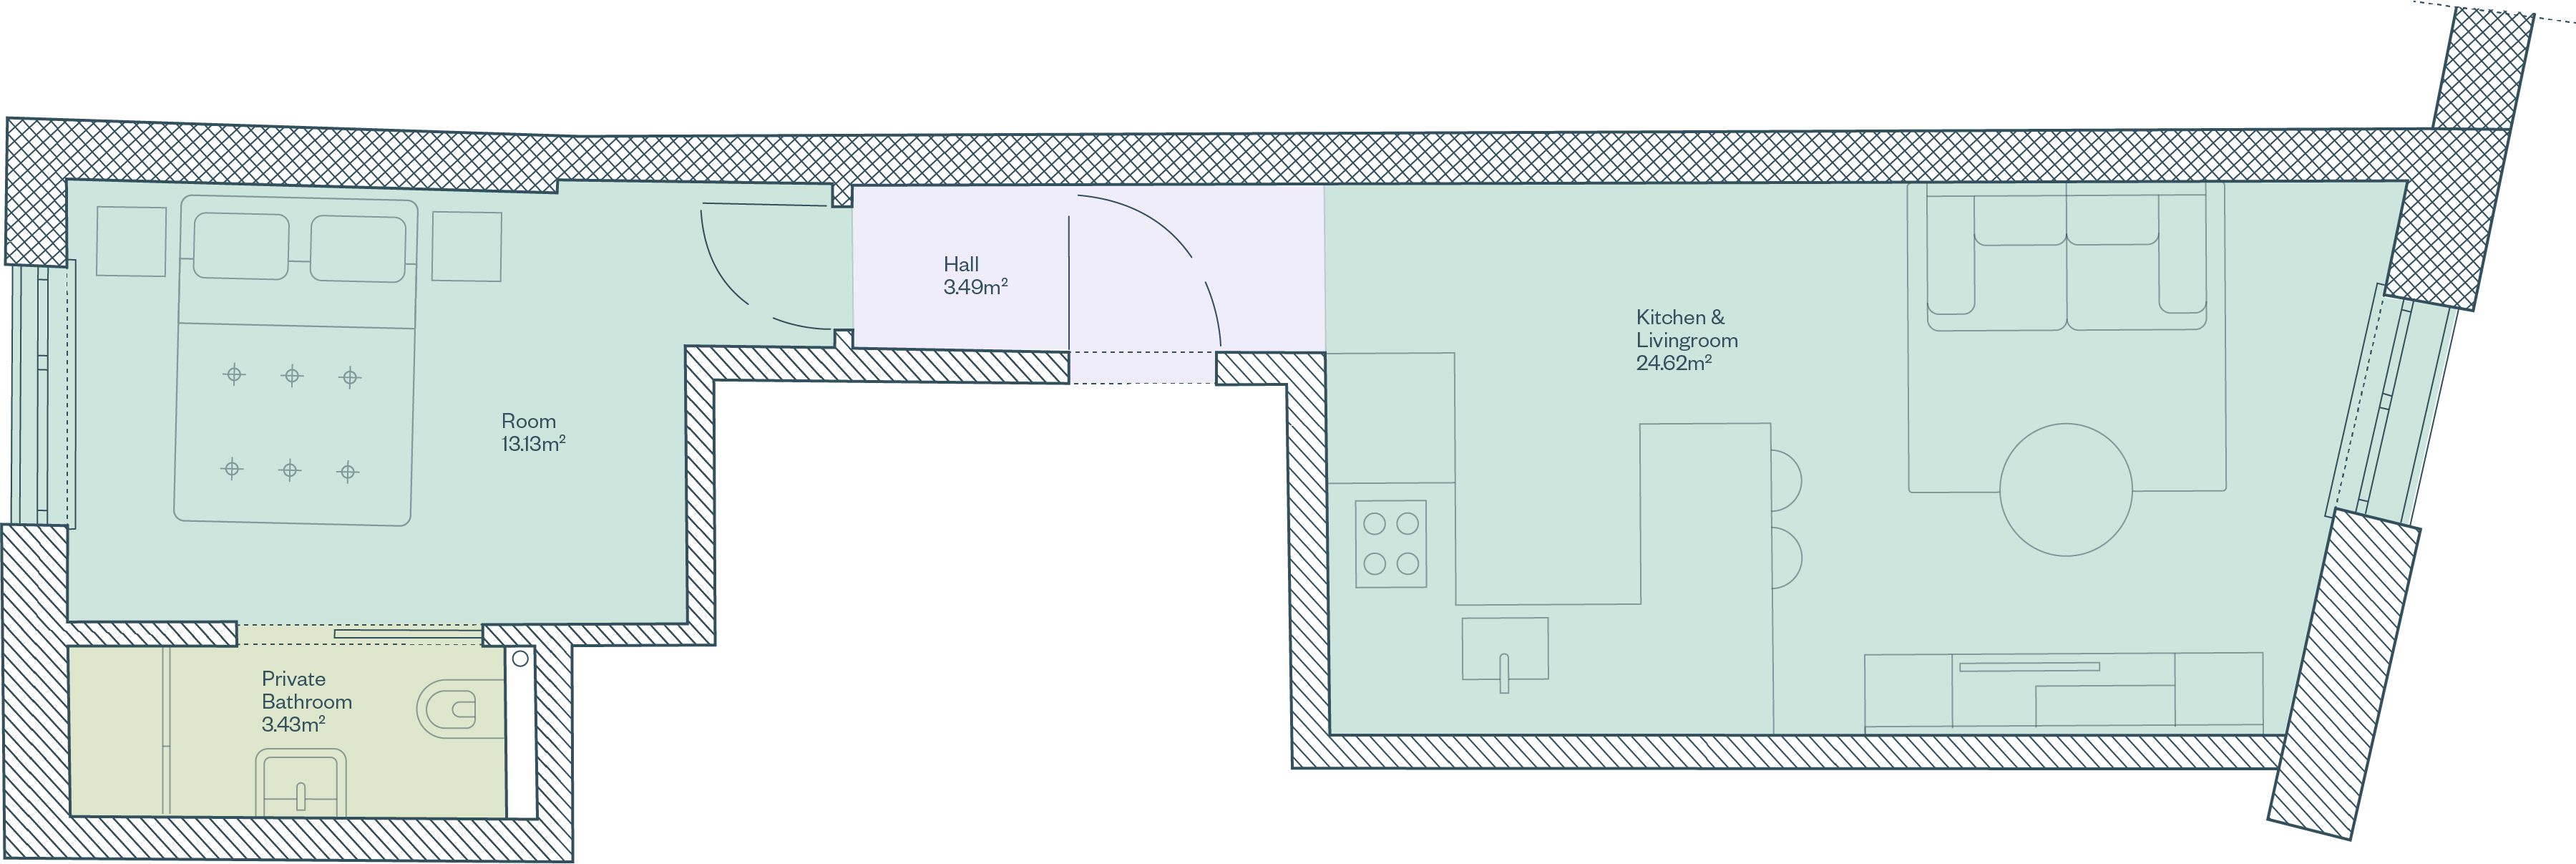 Floorplan of Pulvermuhl apartment at Origer Apartments